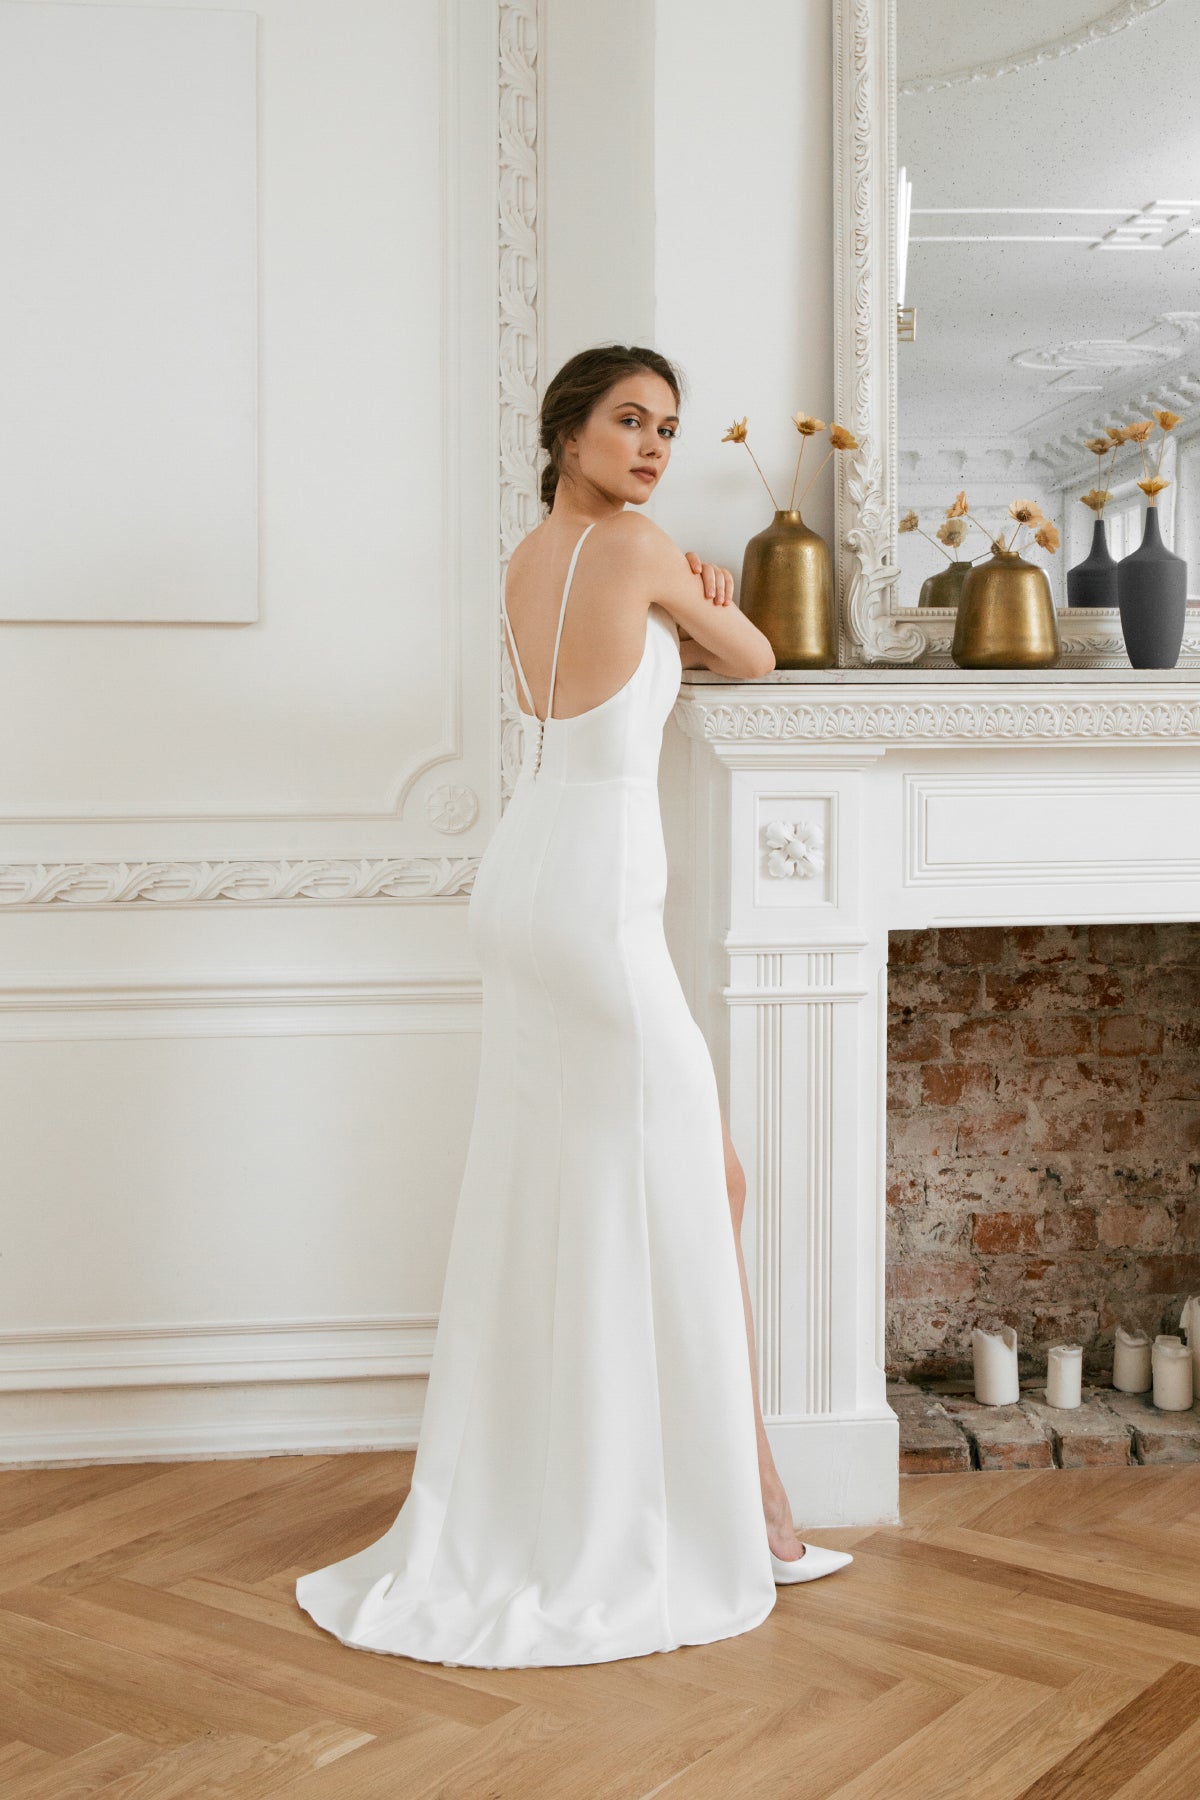 Open back wedding dress • skirt with slit • spaghetti straps • elegant wedding gown